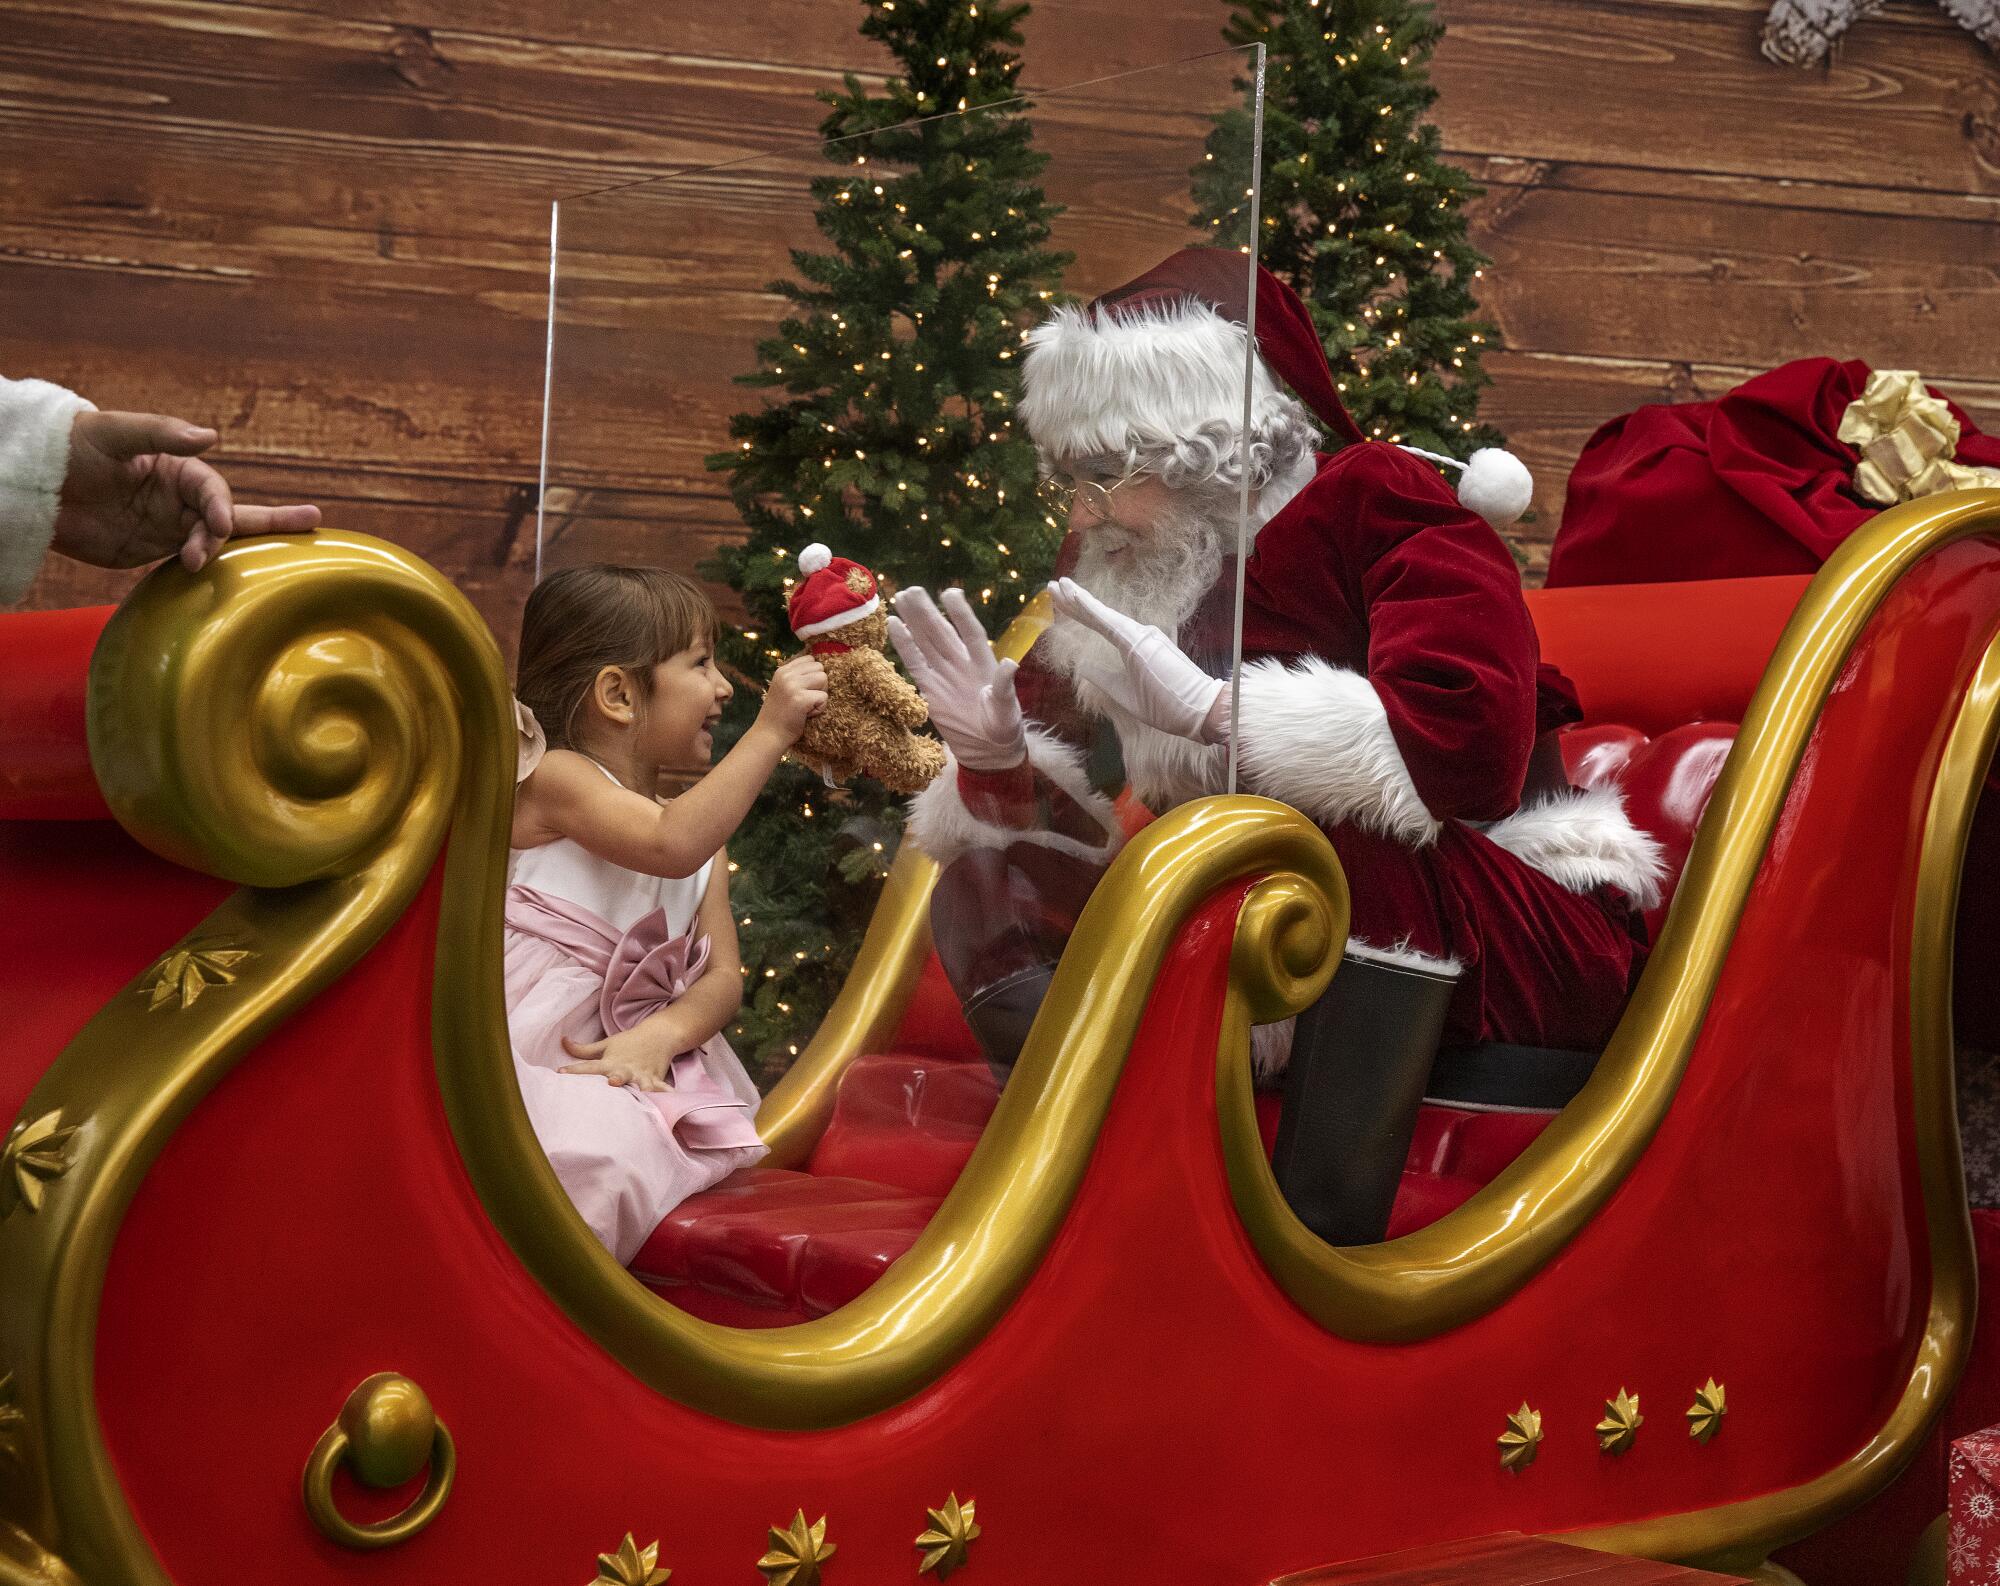 Delilah Liljedahl-Loya, 3, greets Santa Claus, seated inside his sleigh